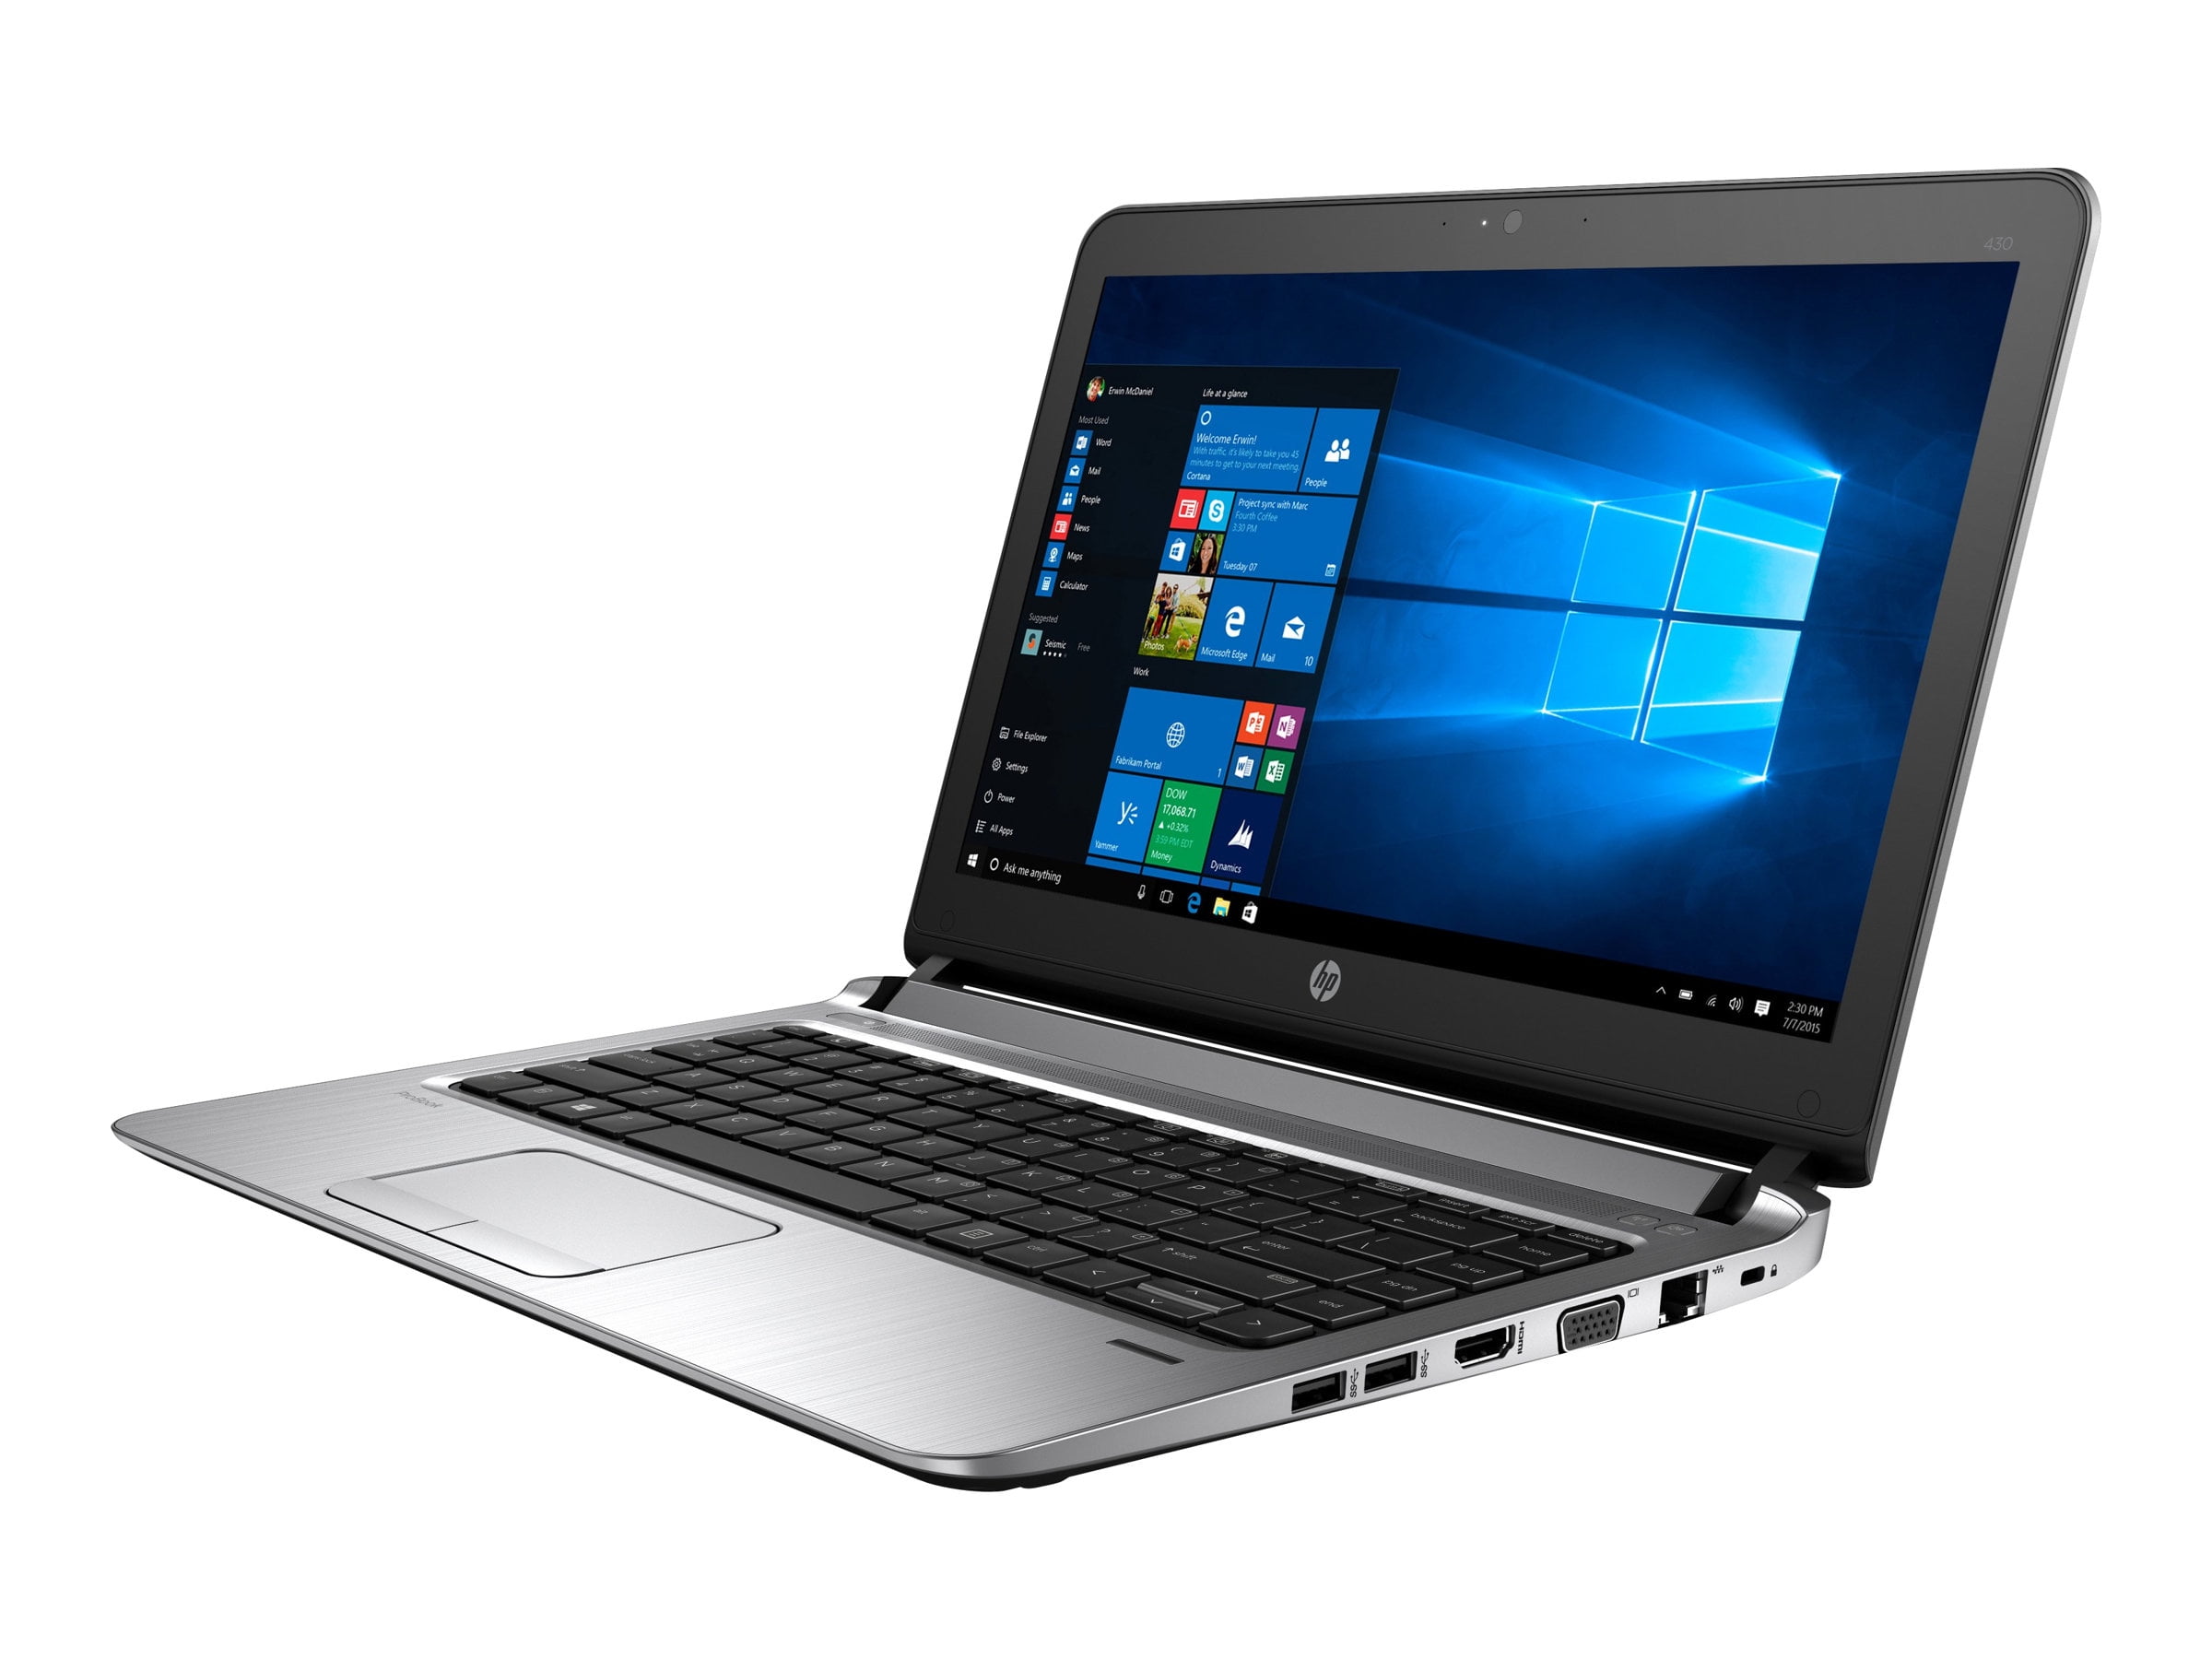 HP ProBook 430 G3 Notebook - Intel Core i3 6100U / 2.3 GHz - Win 10 Home  64-bit - HD Graphics 520 - 4 GB RAM - 500 GB Hybrid Drive - 13.3